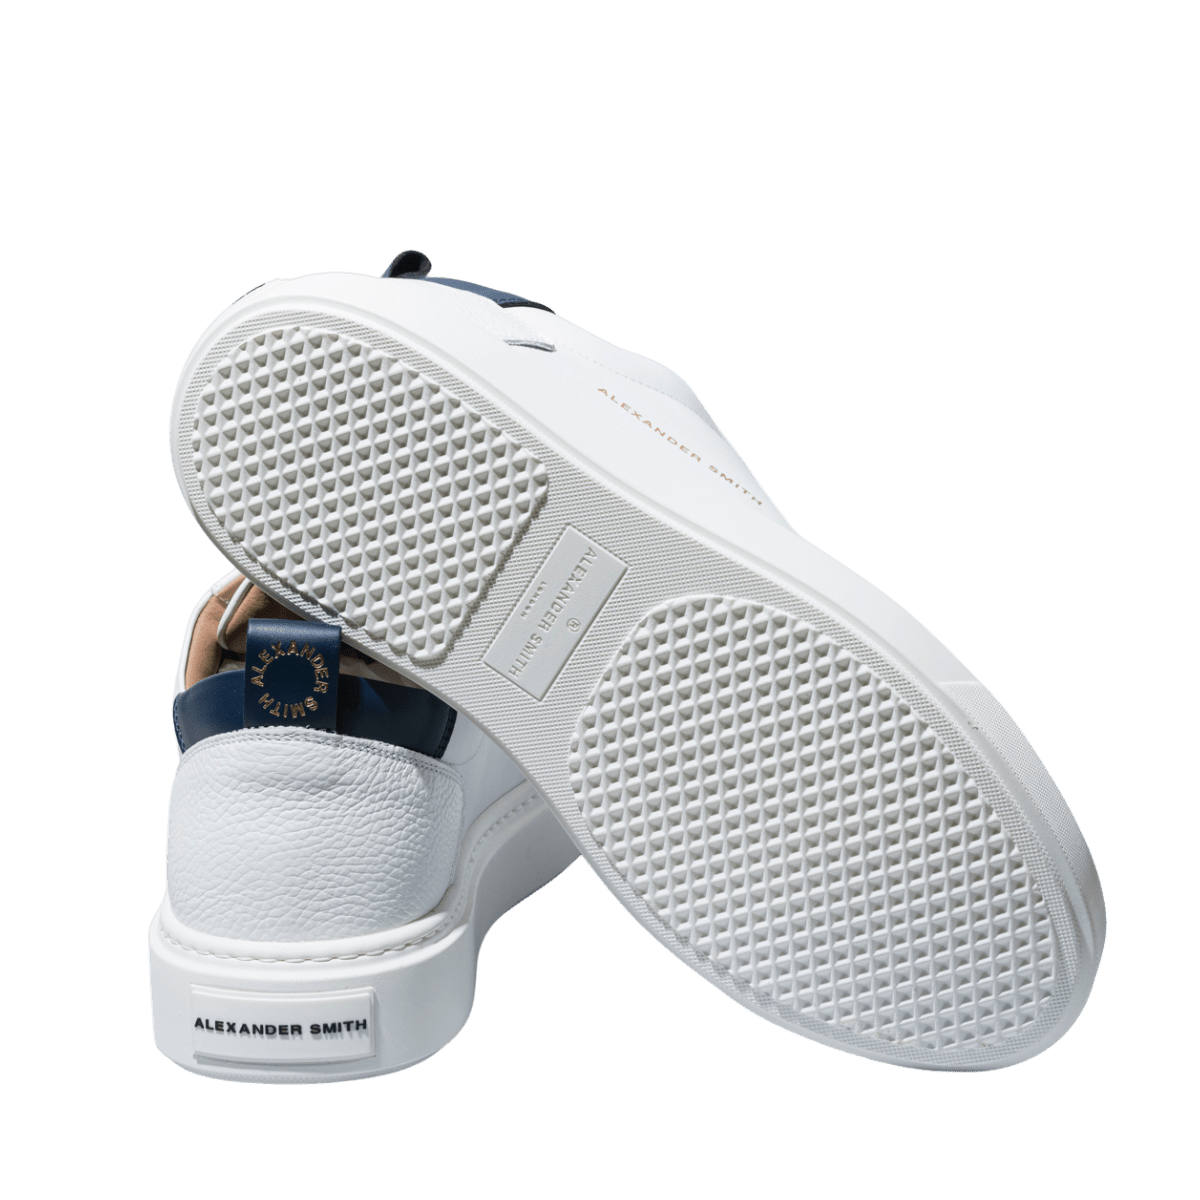 Sneaker Alexander Smith Bond White-Blue - Alexander Smith London - Calzature Savorè